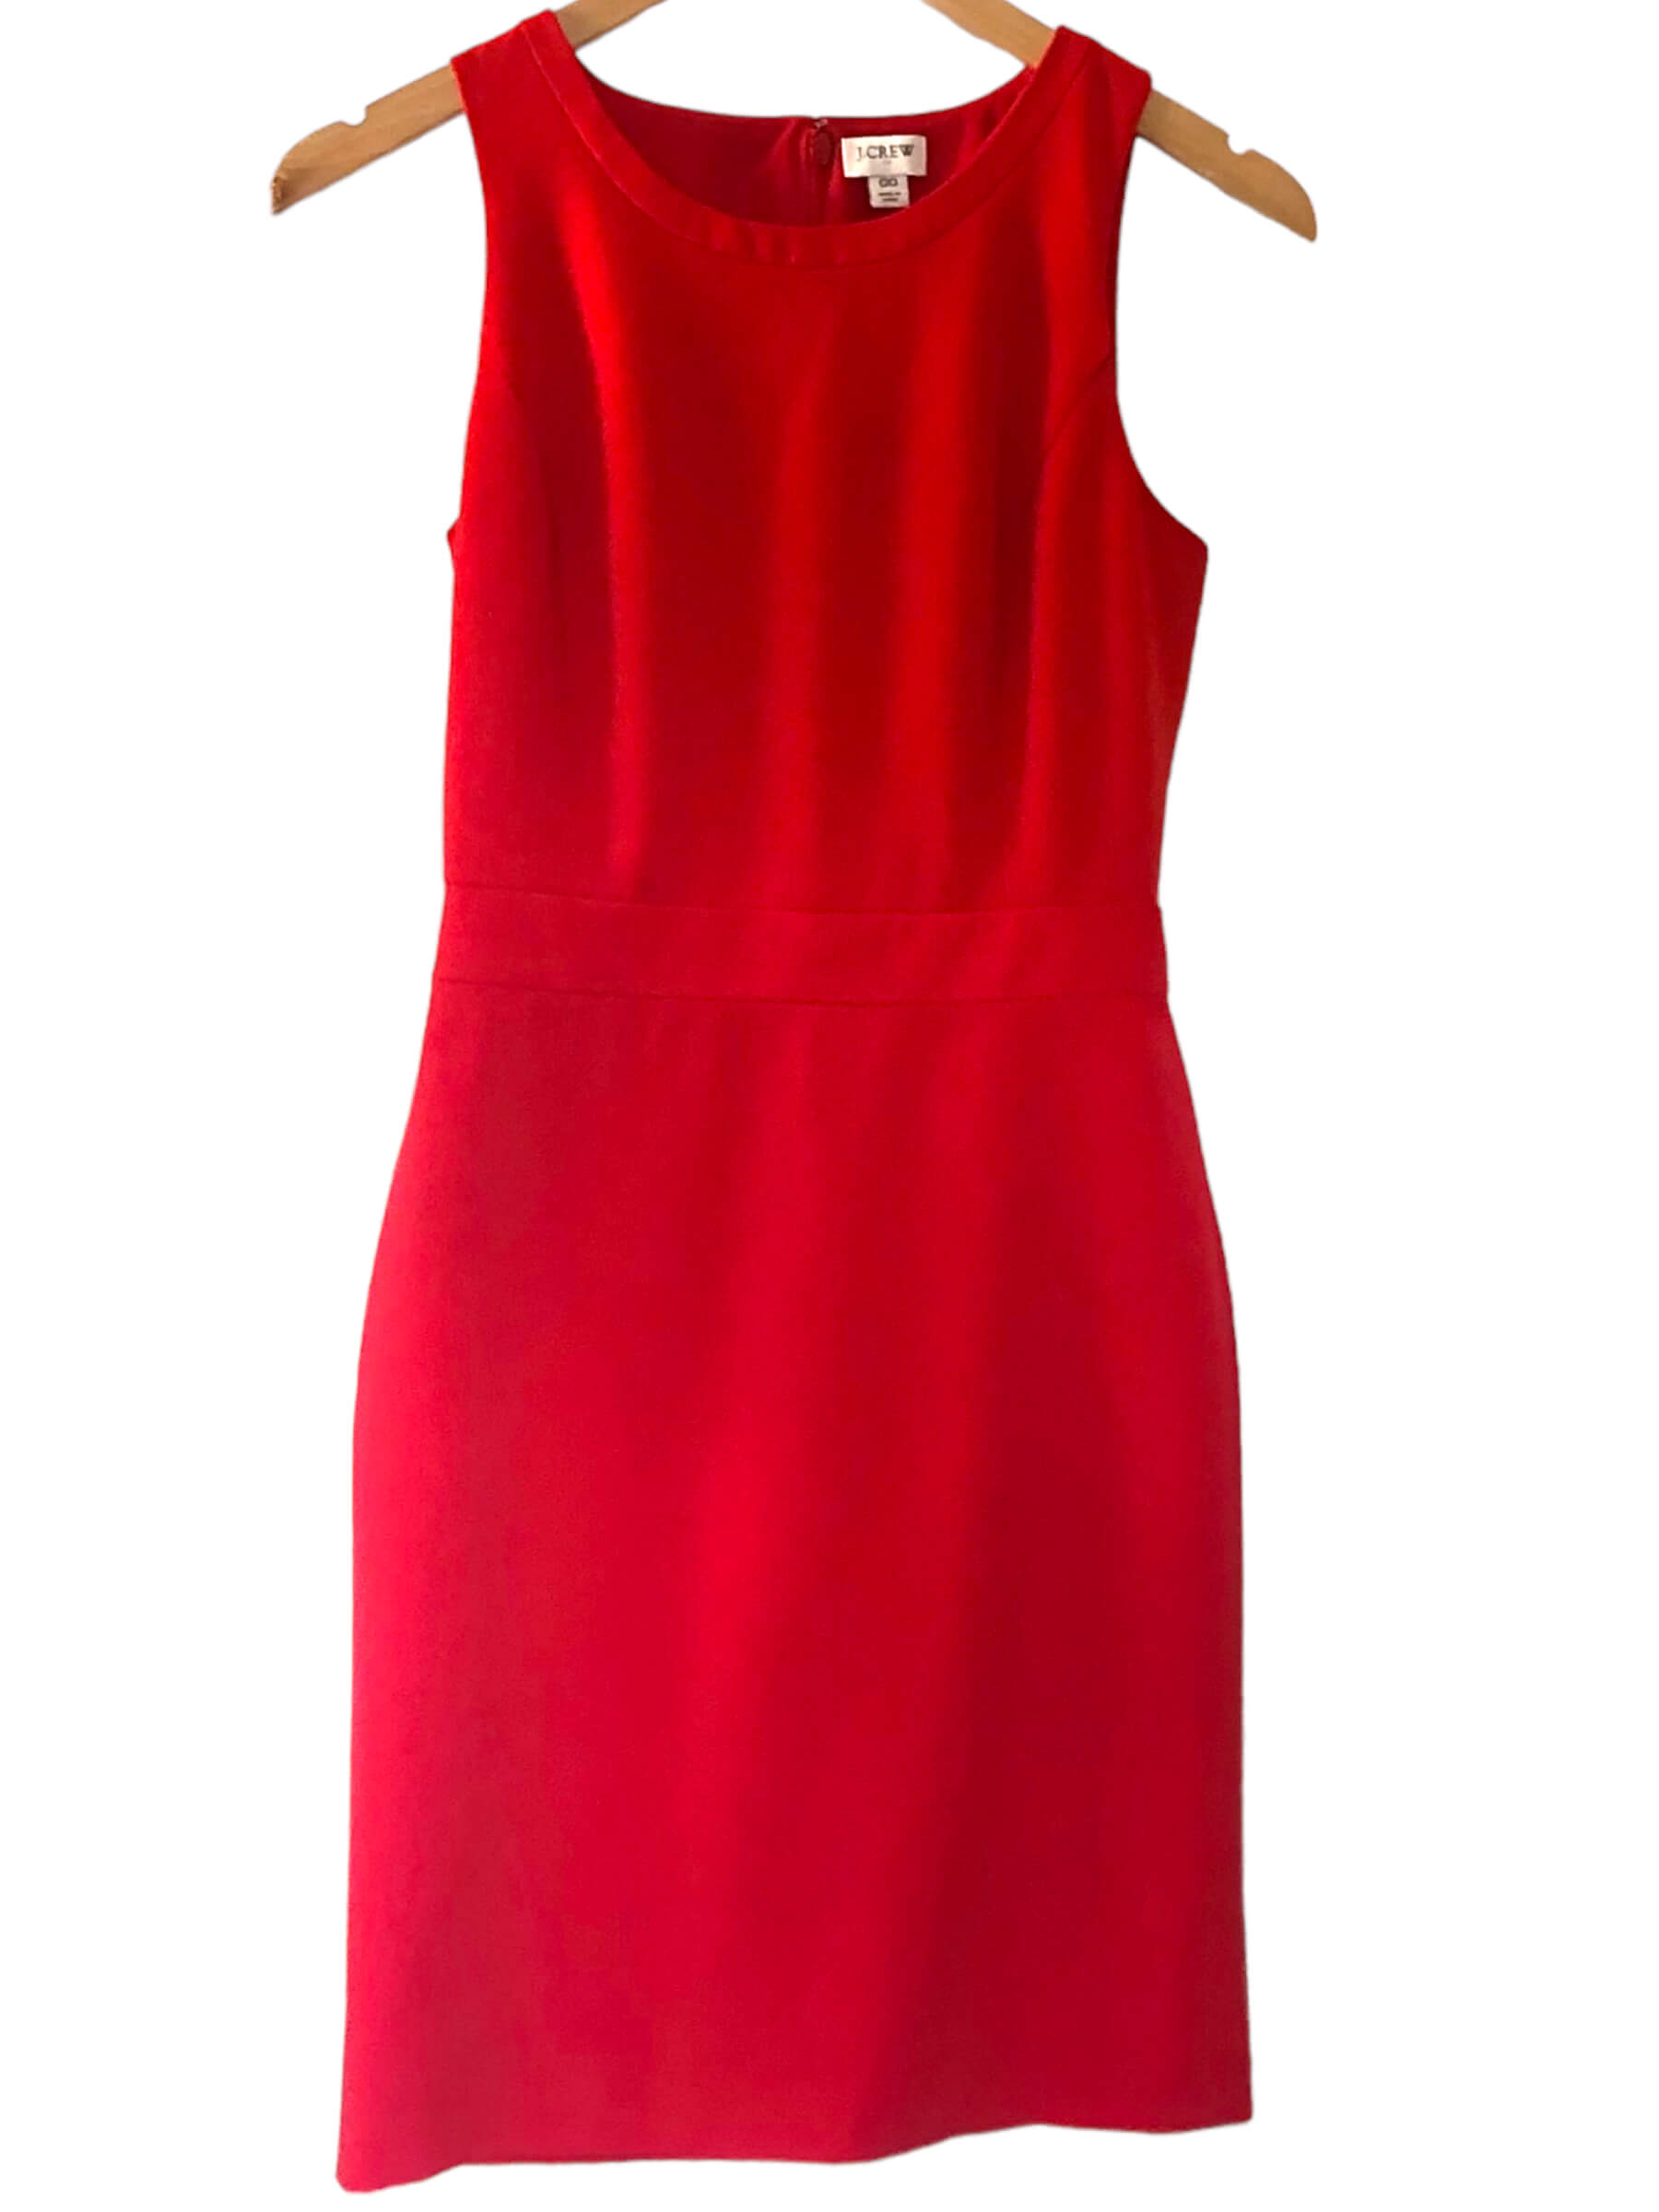 Warm Spring J.CREW cerise red sleeveless dress